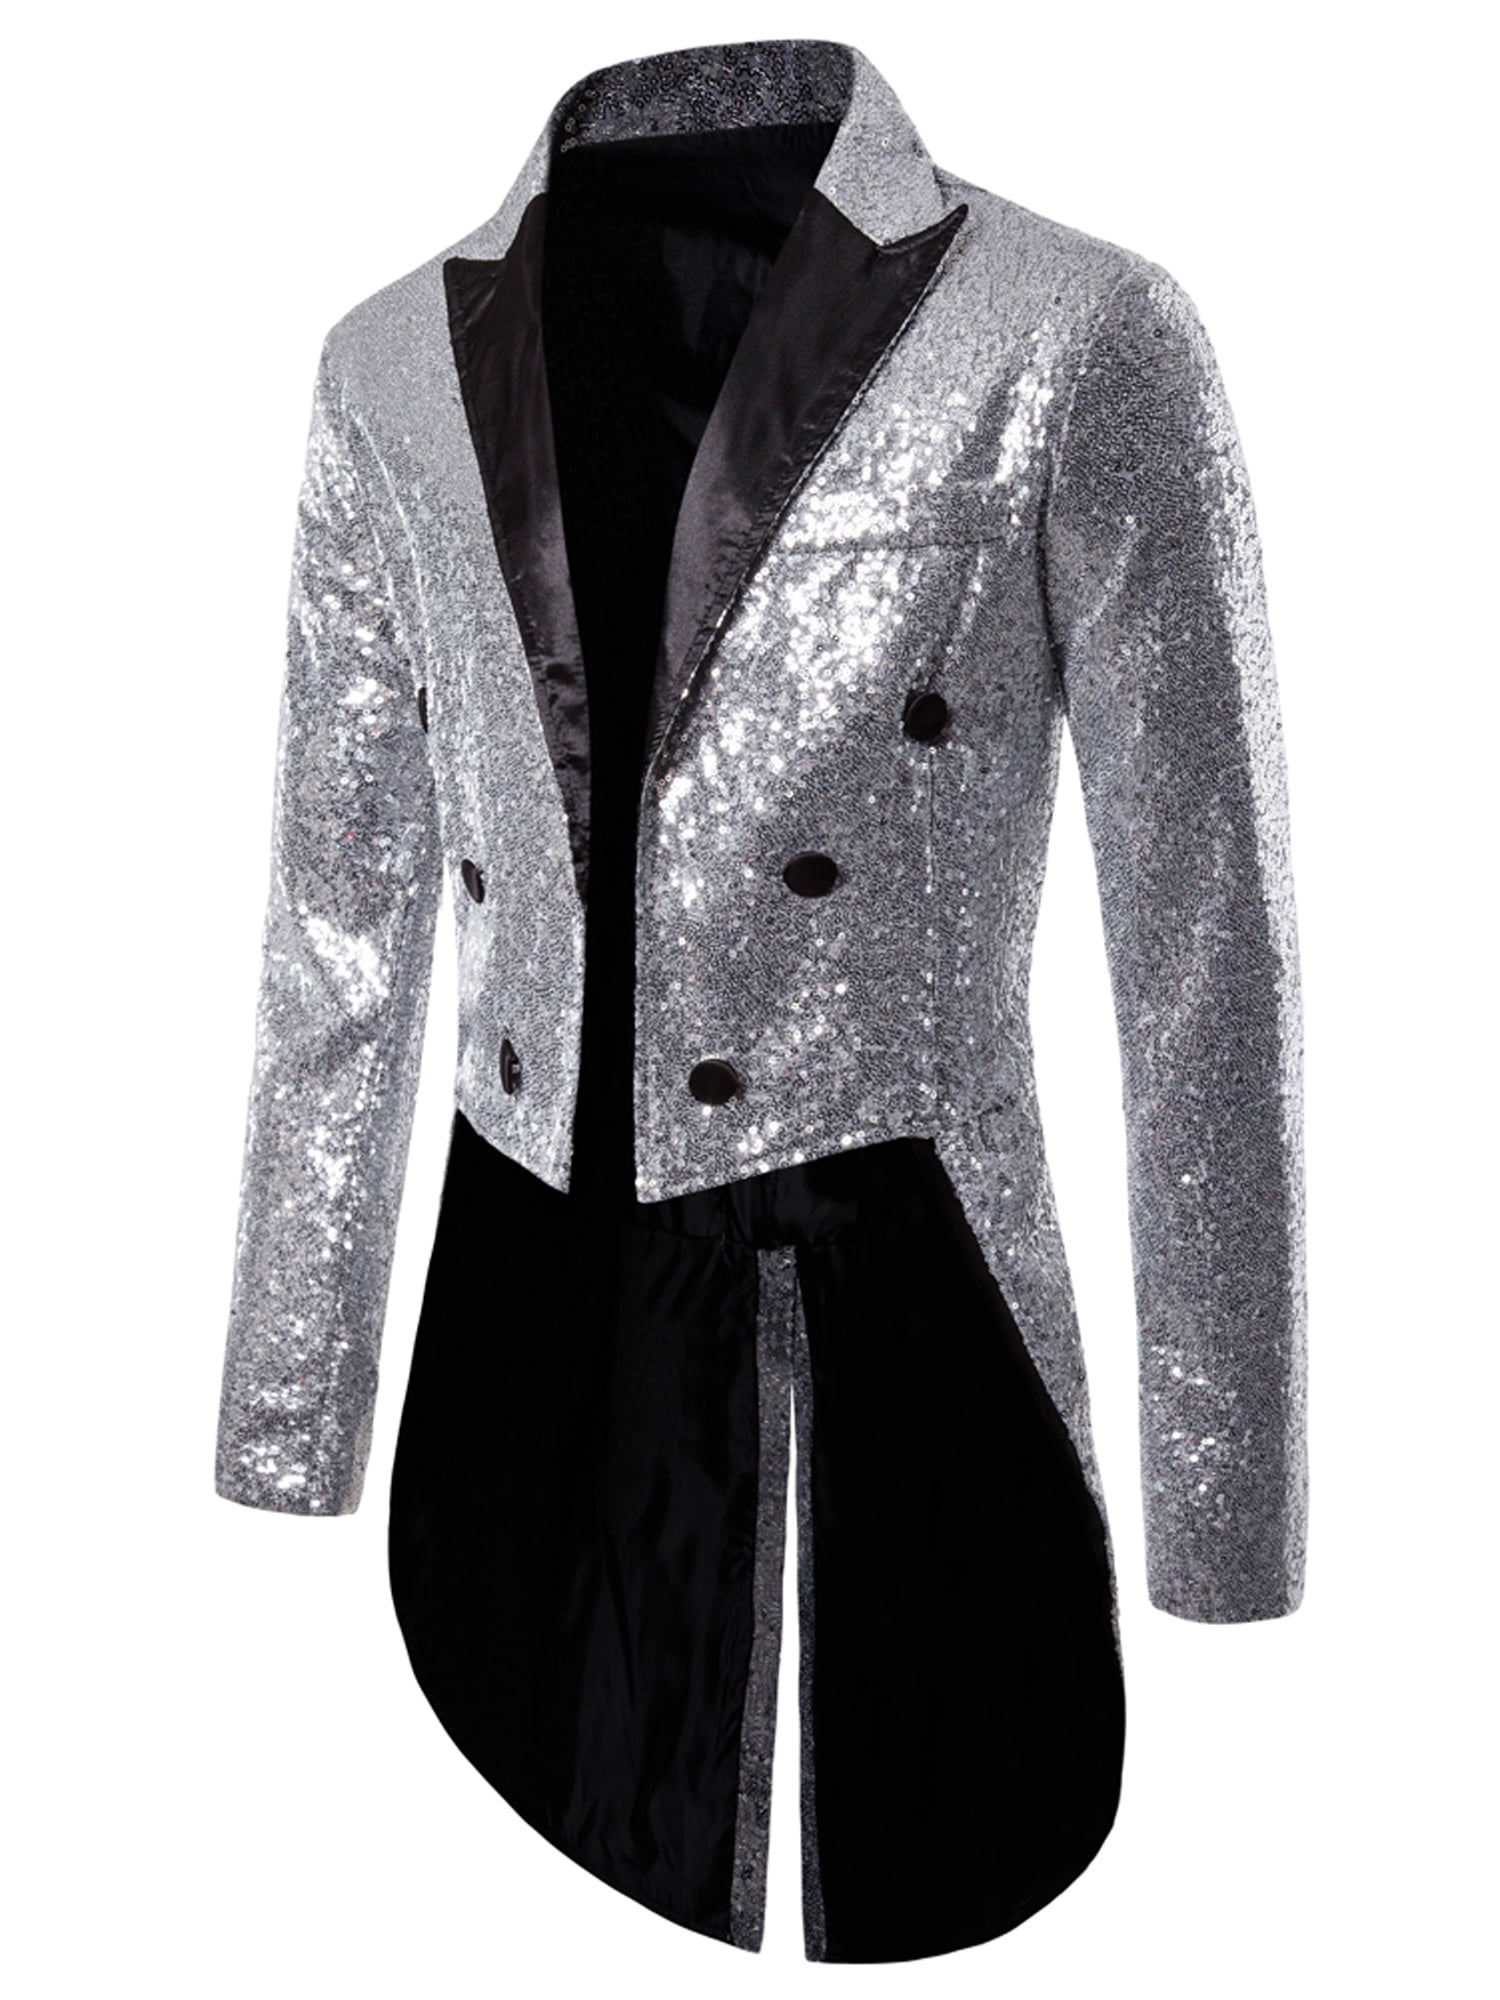 BEELADAN Men's Suit Sequin Tailcoat Swallowtail Suit Jacket Party Show ...